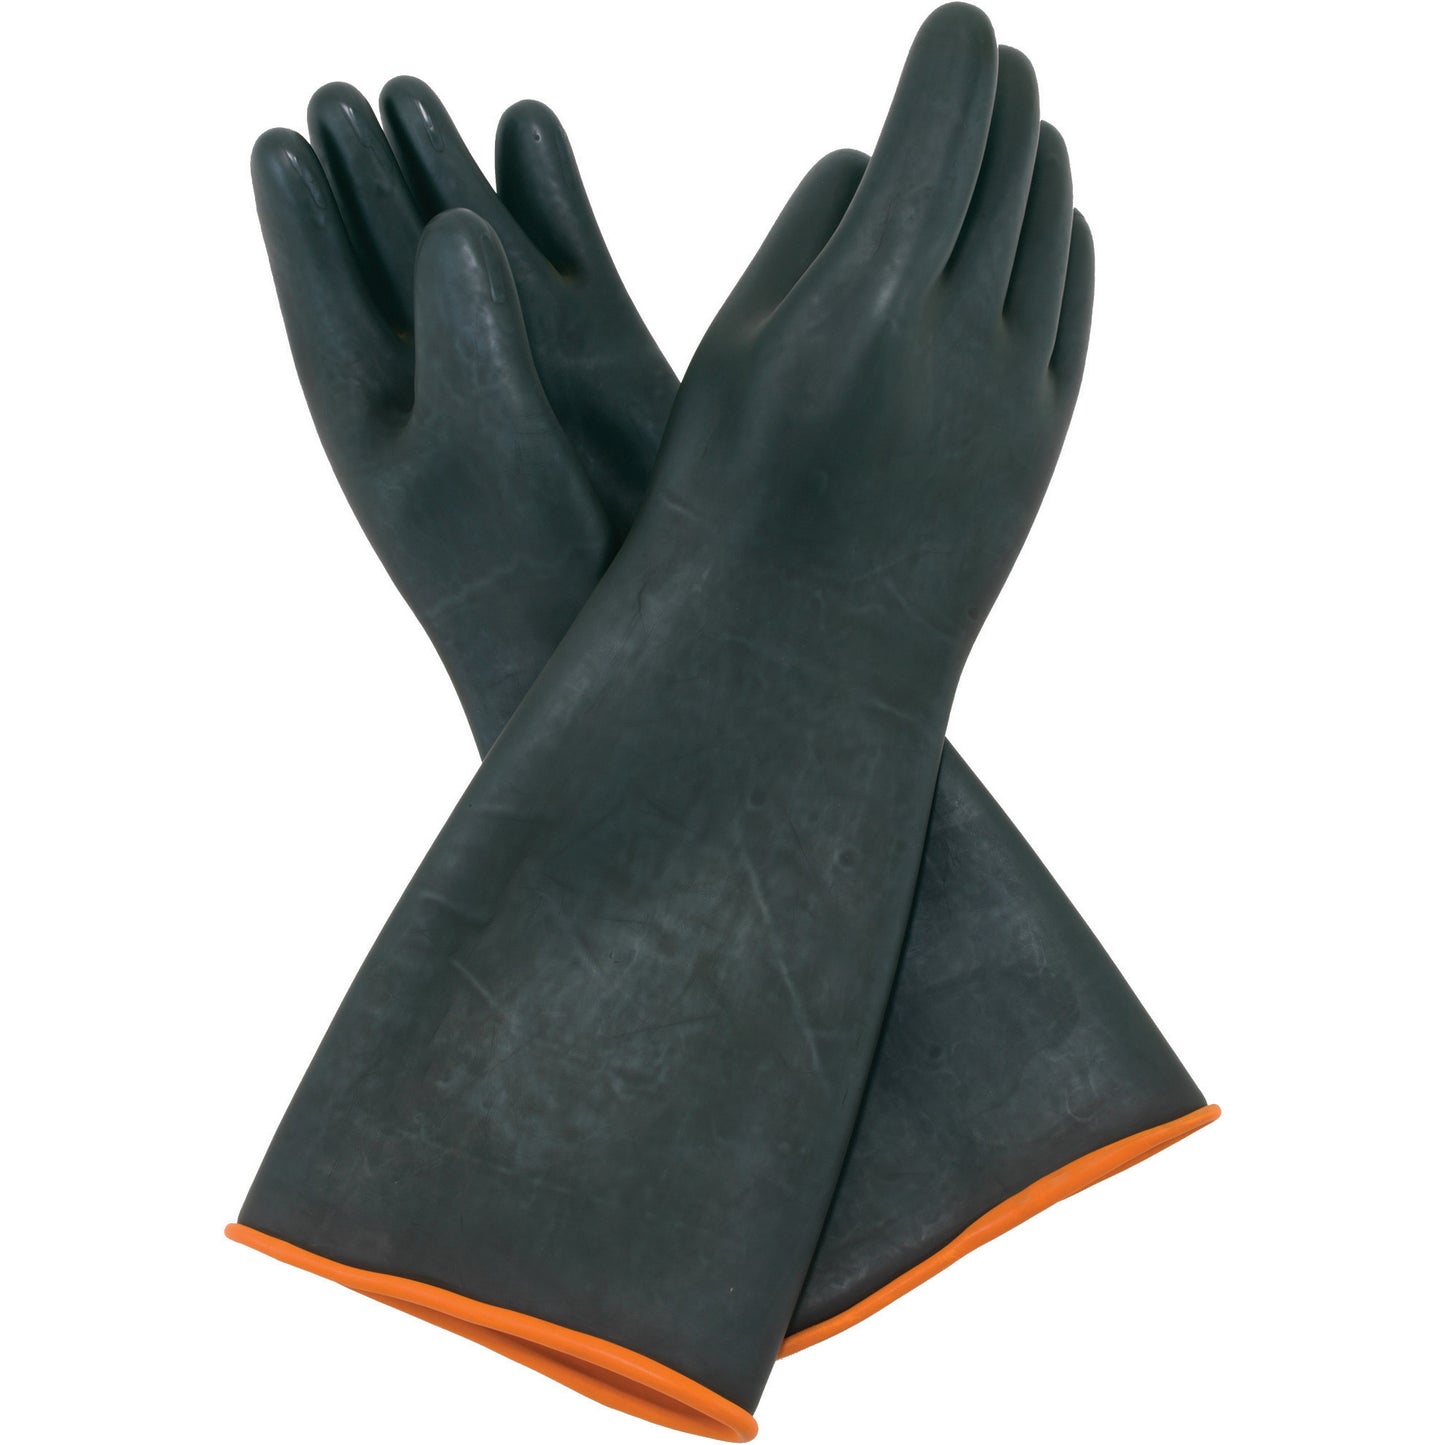 NLGH-18 - Heavy-Duty Natural Latex Gloves, 10-1/2" x 18-1/2"